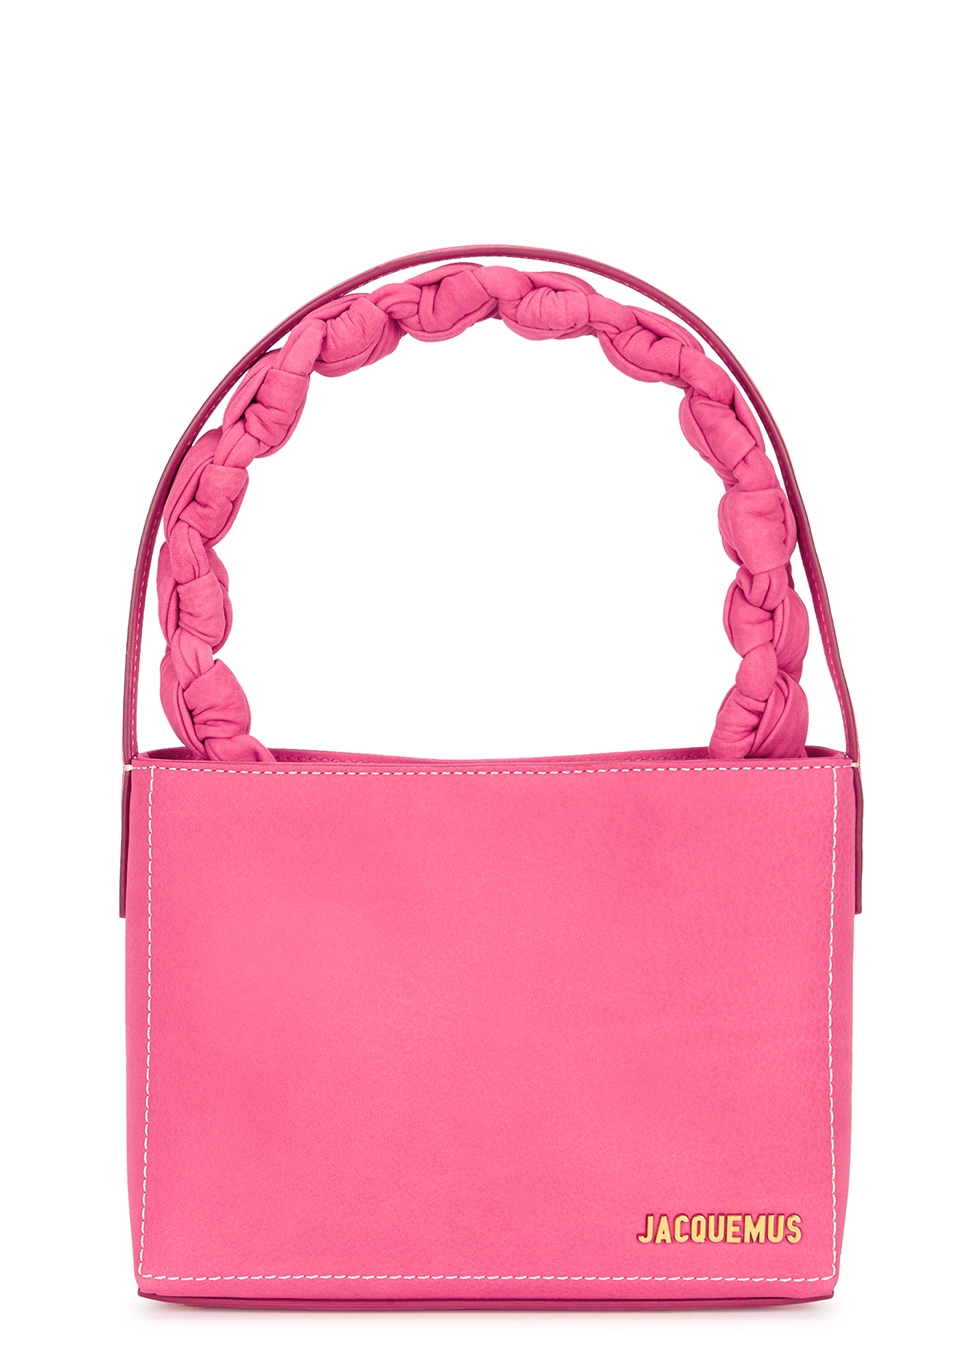 Le Sac Noeud pink nubuck top handle bag